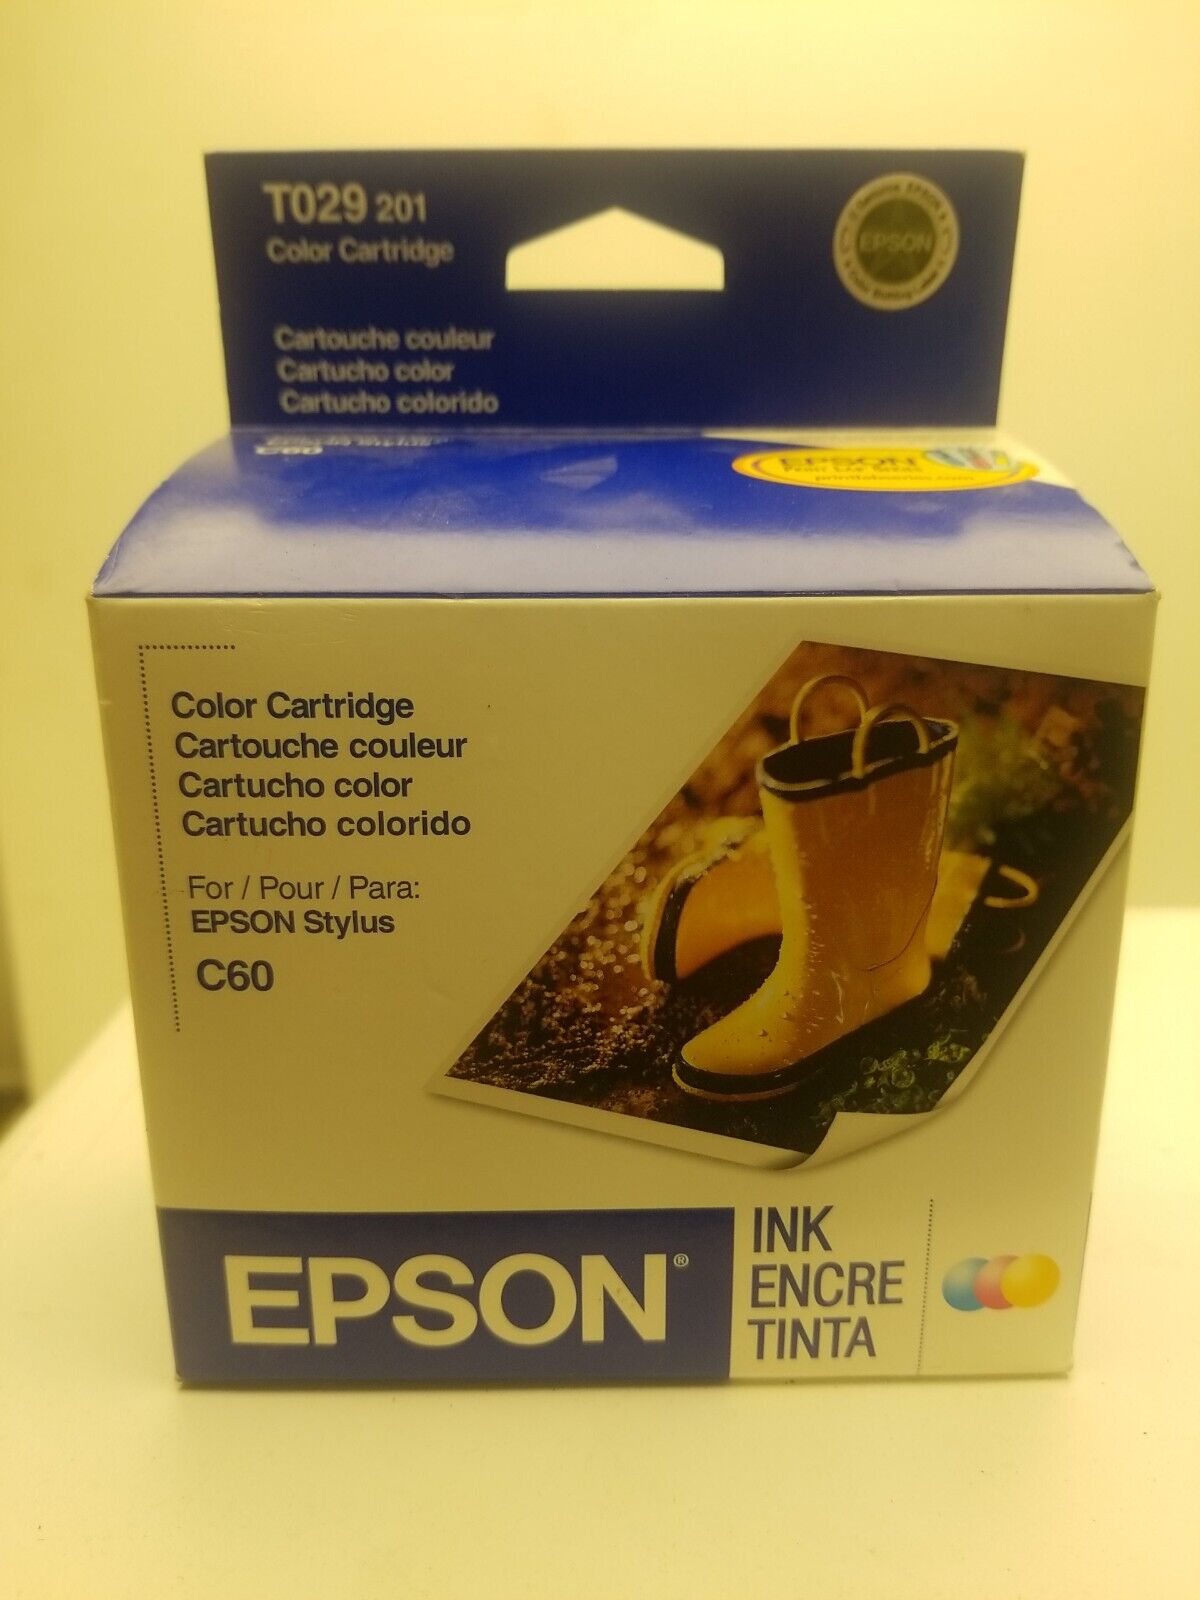 Genuine Epson T029 201 Color Cartridge for Epson Stylus C60 Expired NOS Sealed